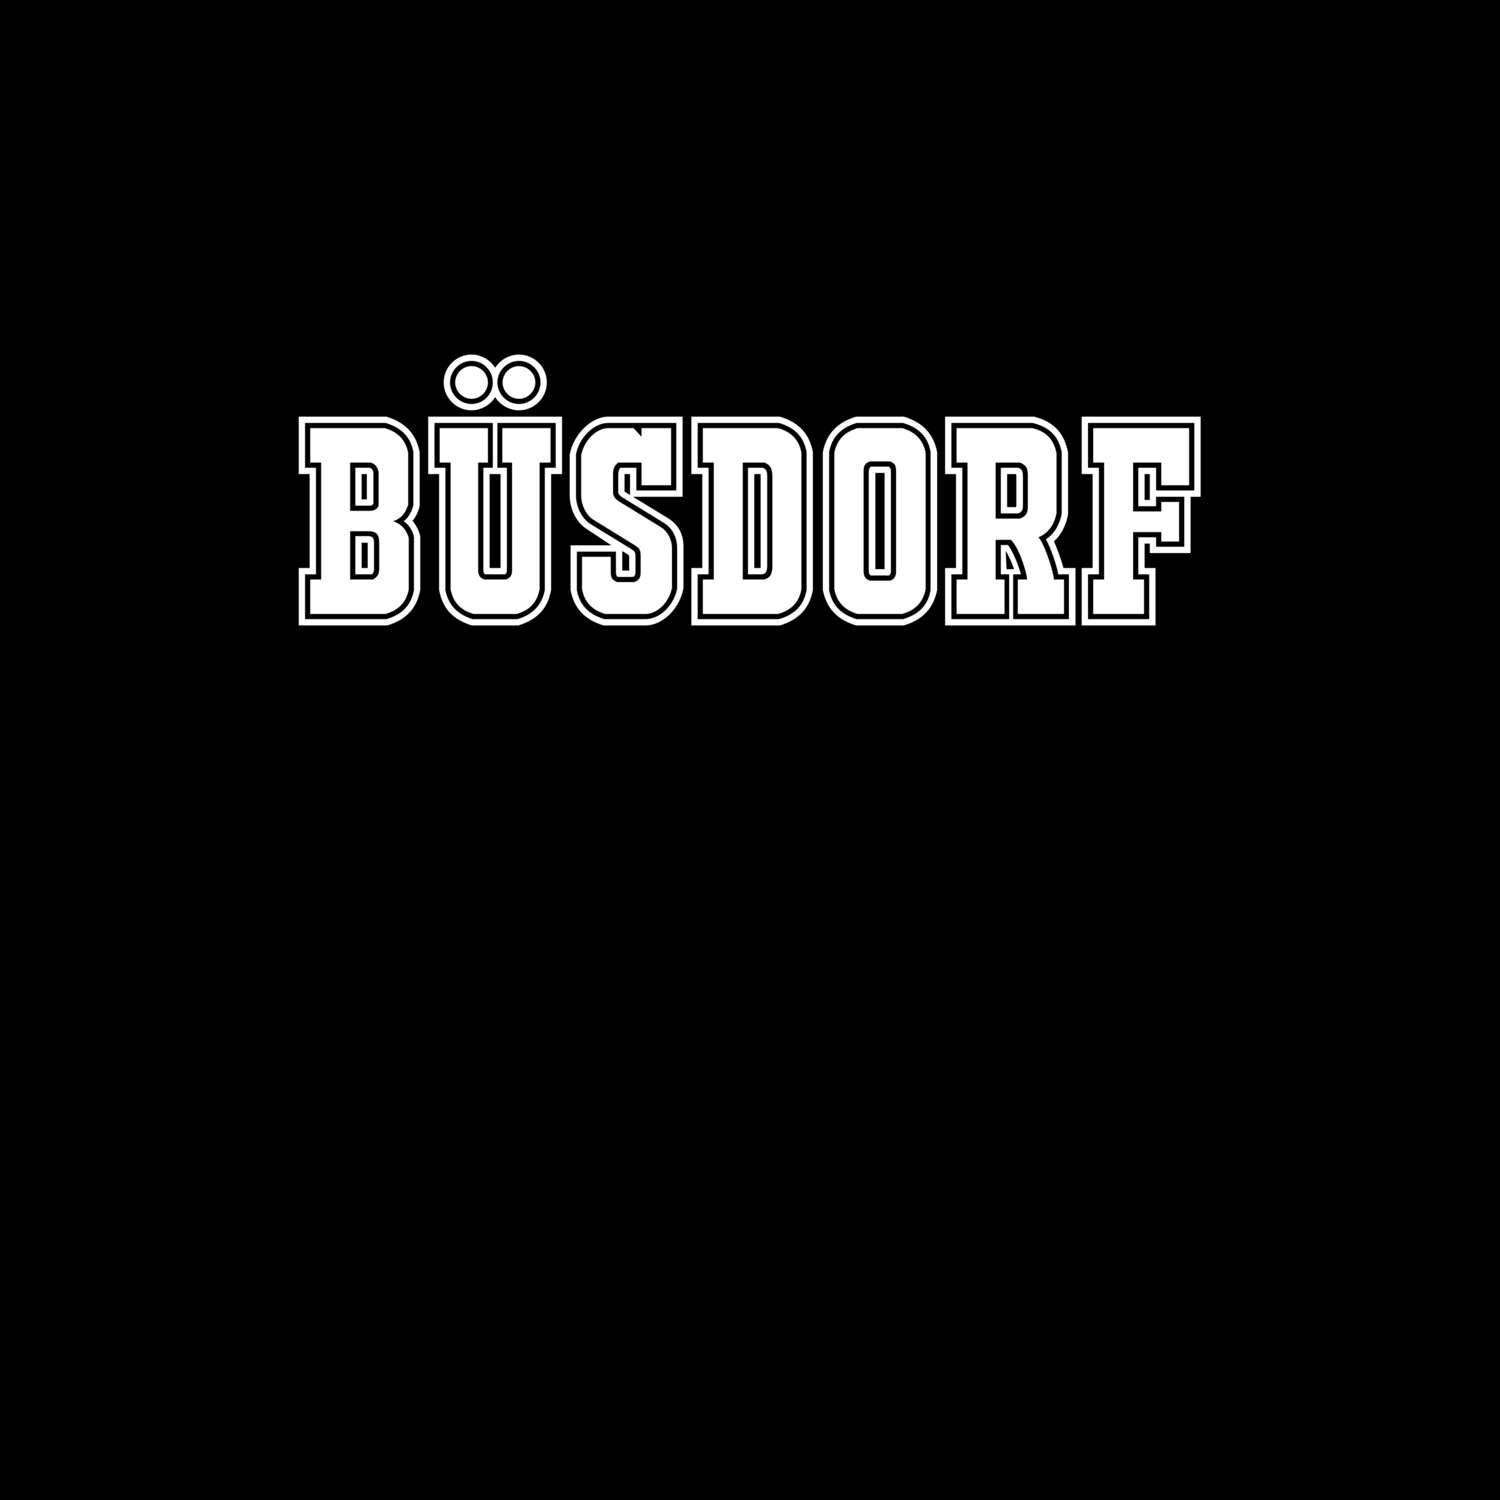 Büsdorf T-Shirt »Classic«